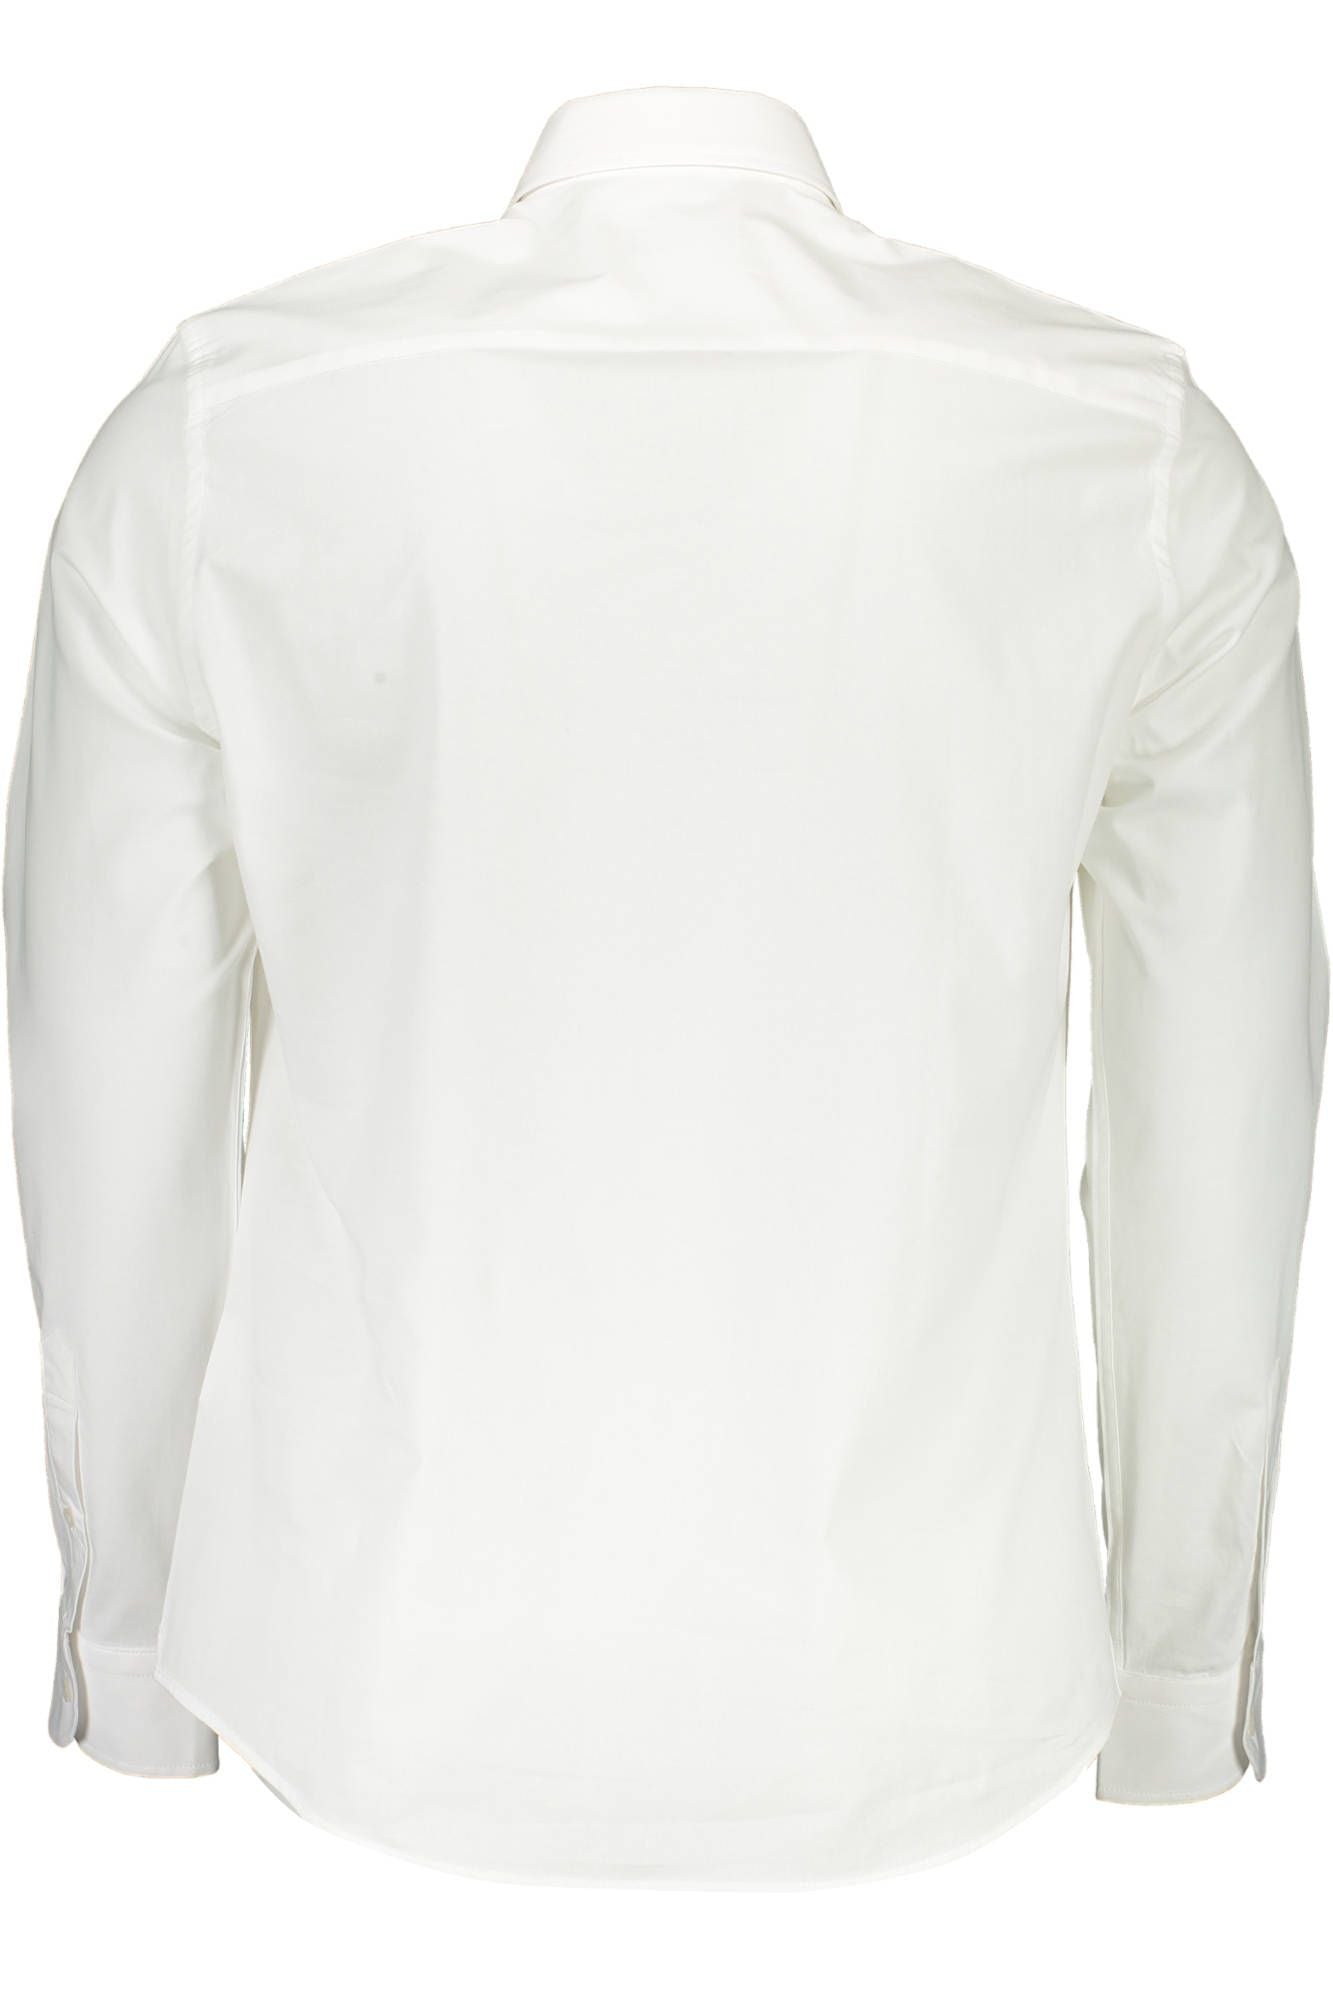 Elegant White Stretch Cotton Shirt